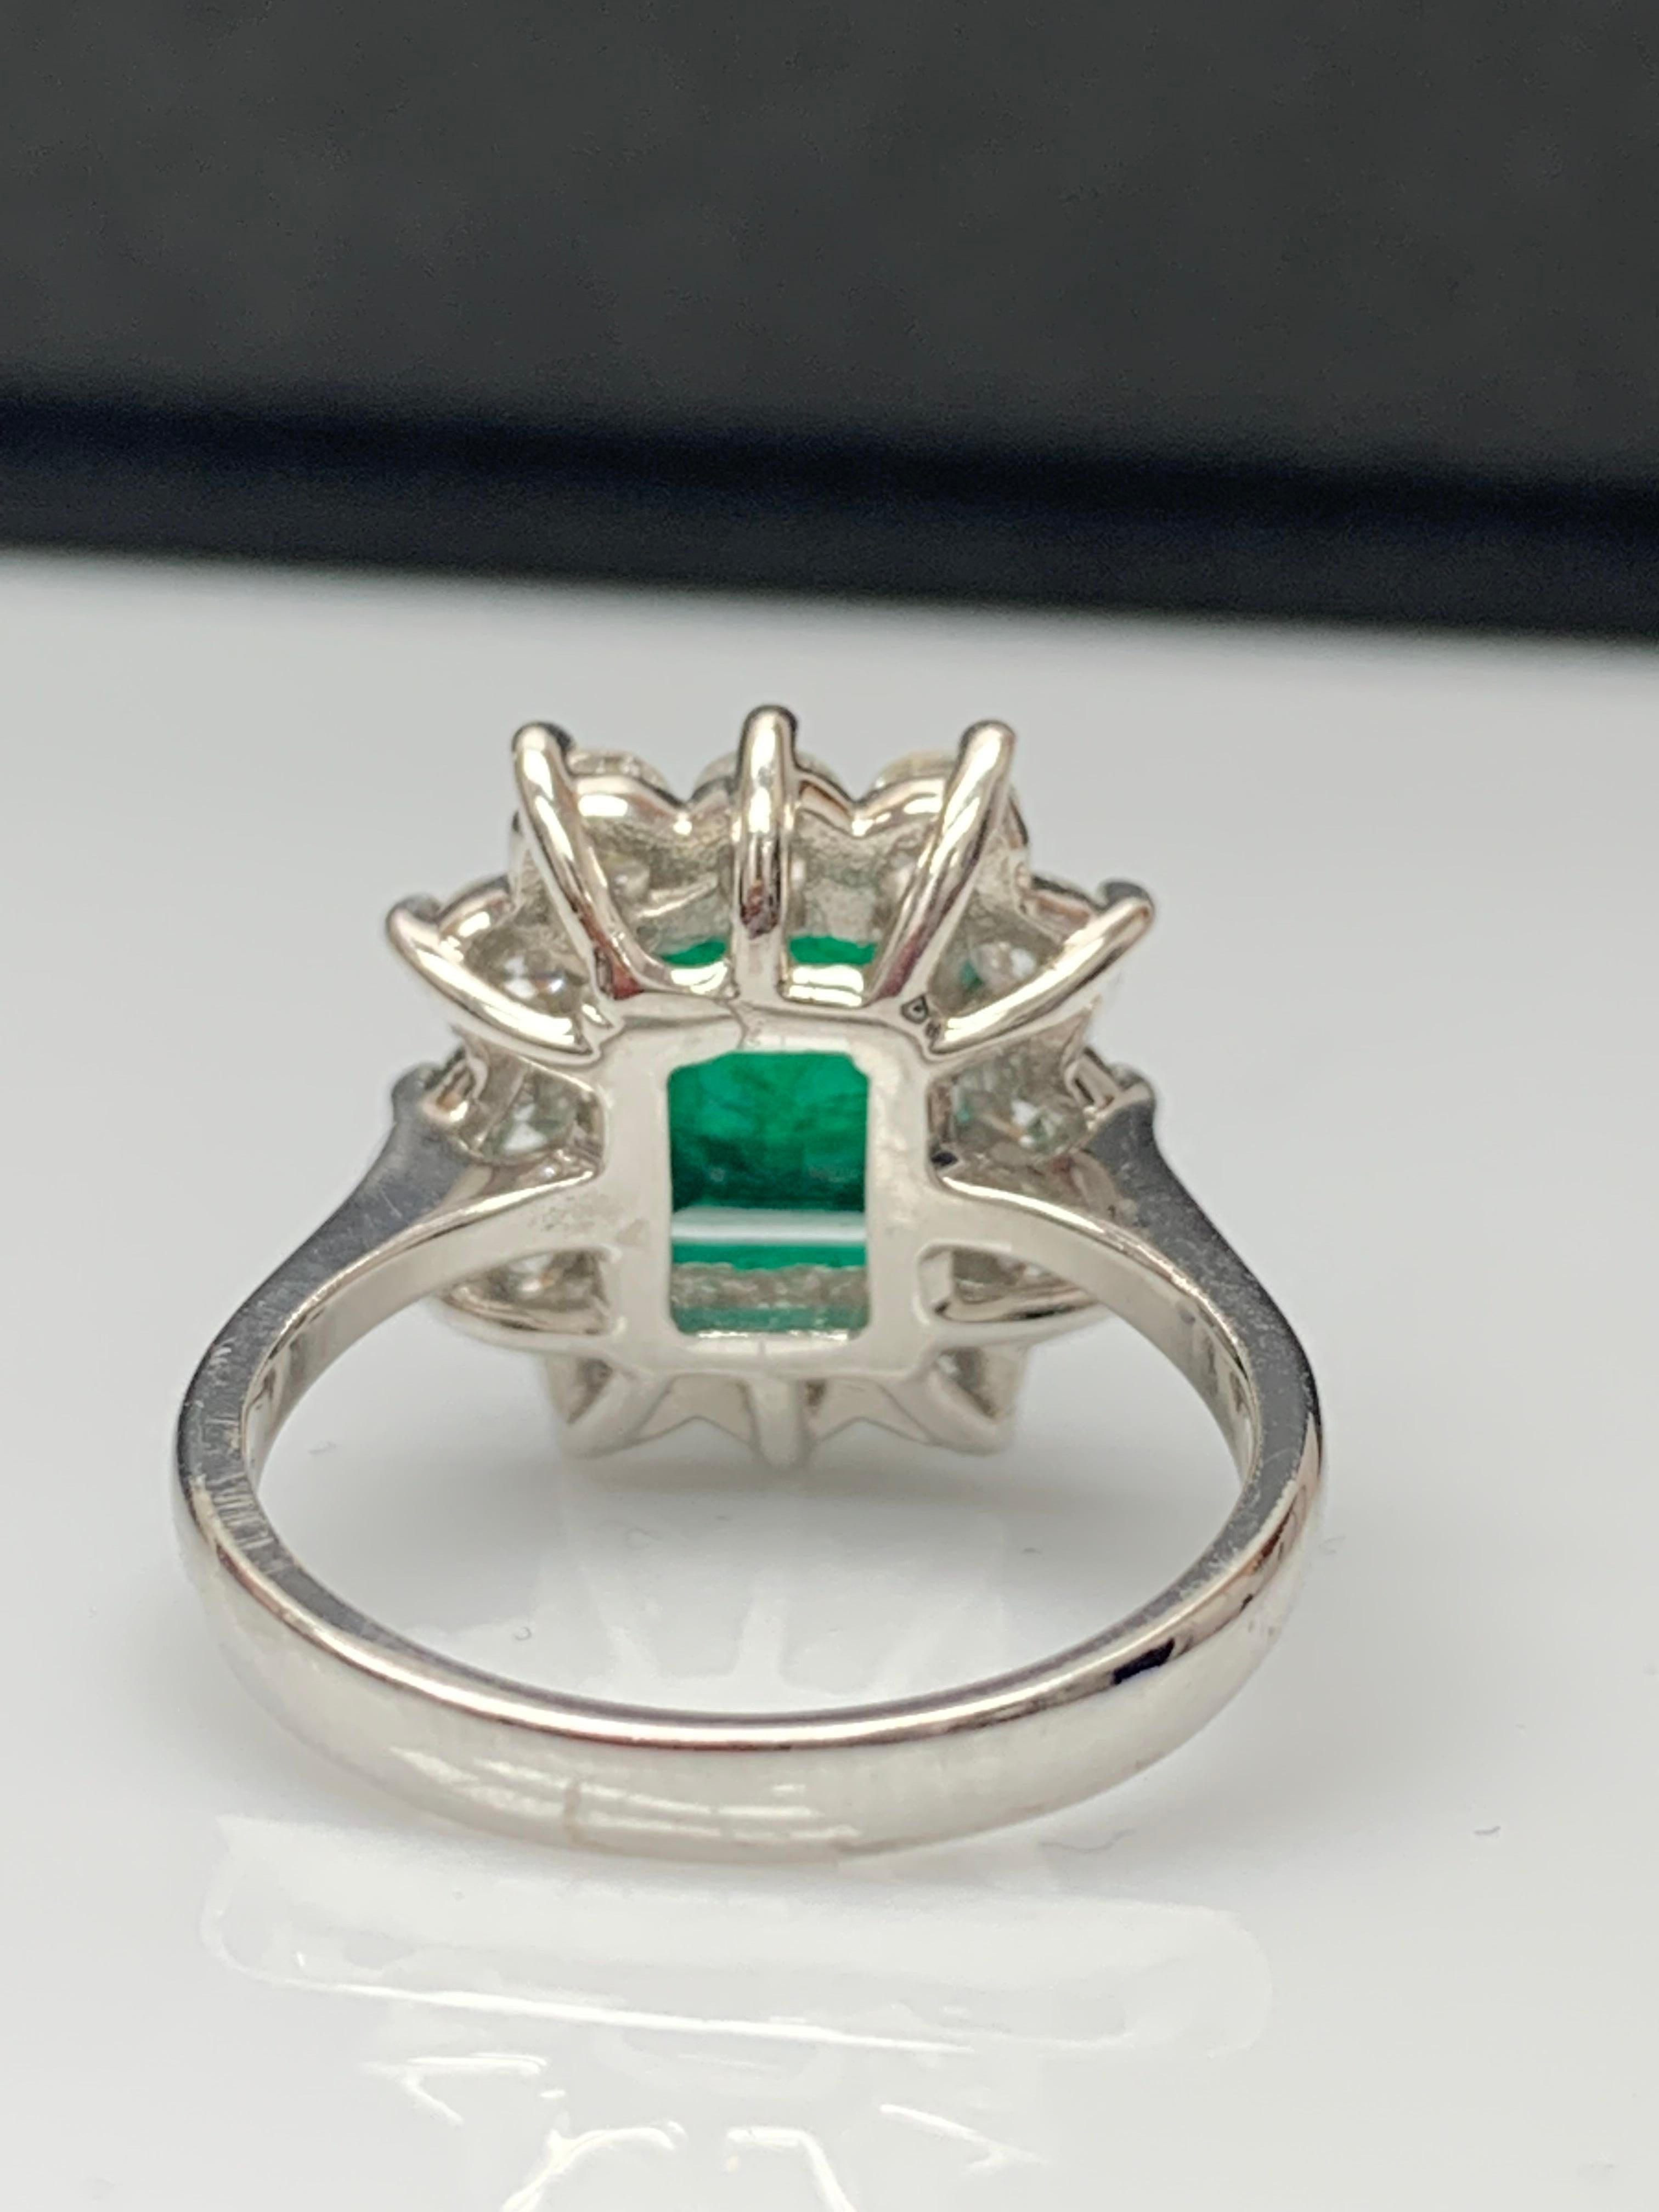 Certified 3.17 Carat Emerald Cut Emerald Diamond Ring in 14K White Gold For Sale 1